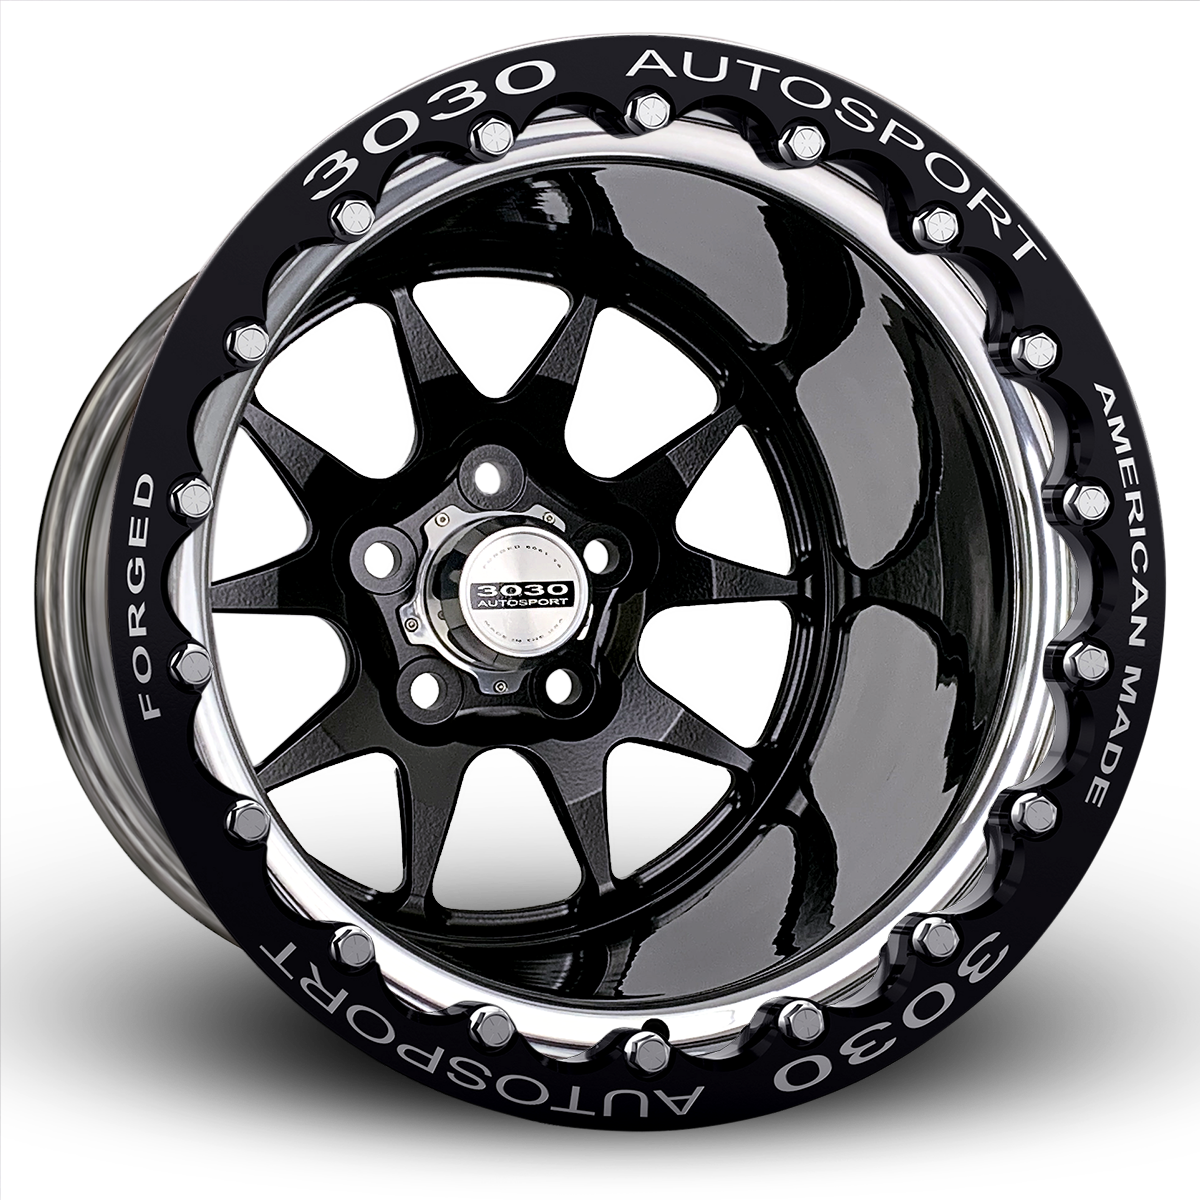 MACH-10 Double-Beadlock Wheel, Size: 15x9", Bolt Pattern: 5x4.5", Backspace: 6" [Black/Polished]